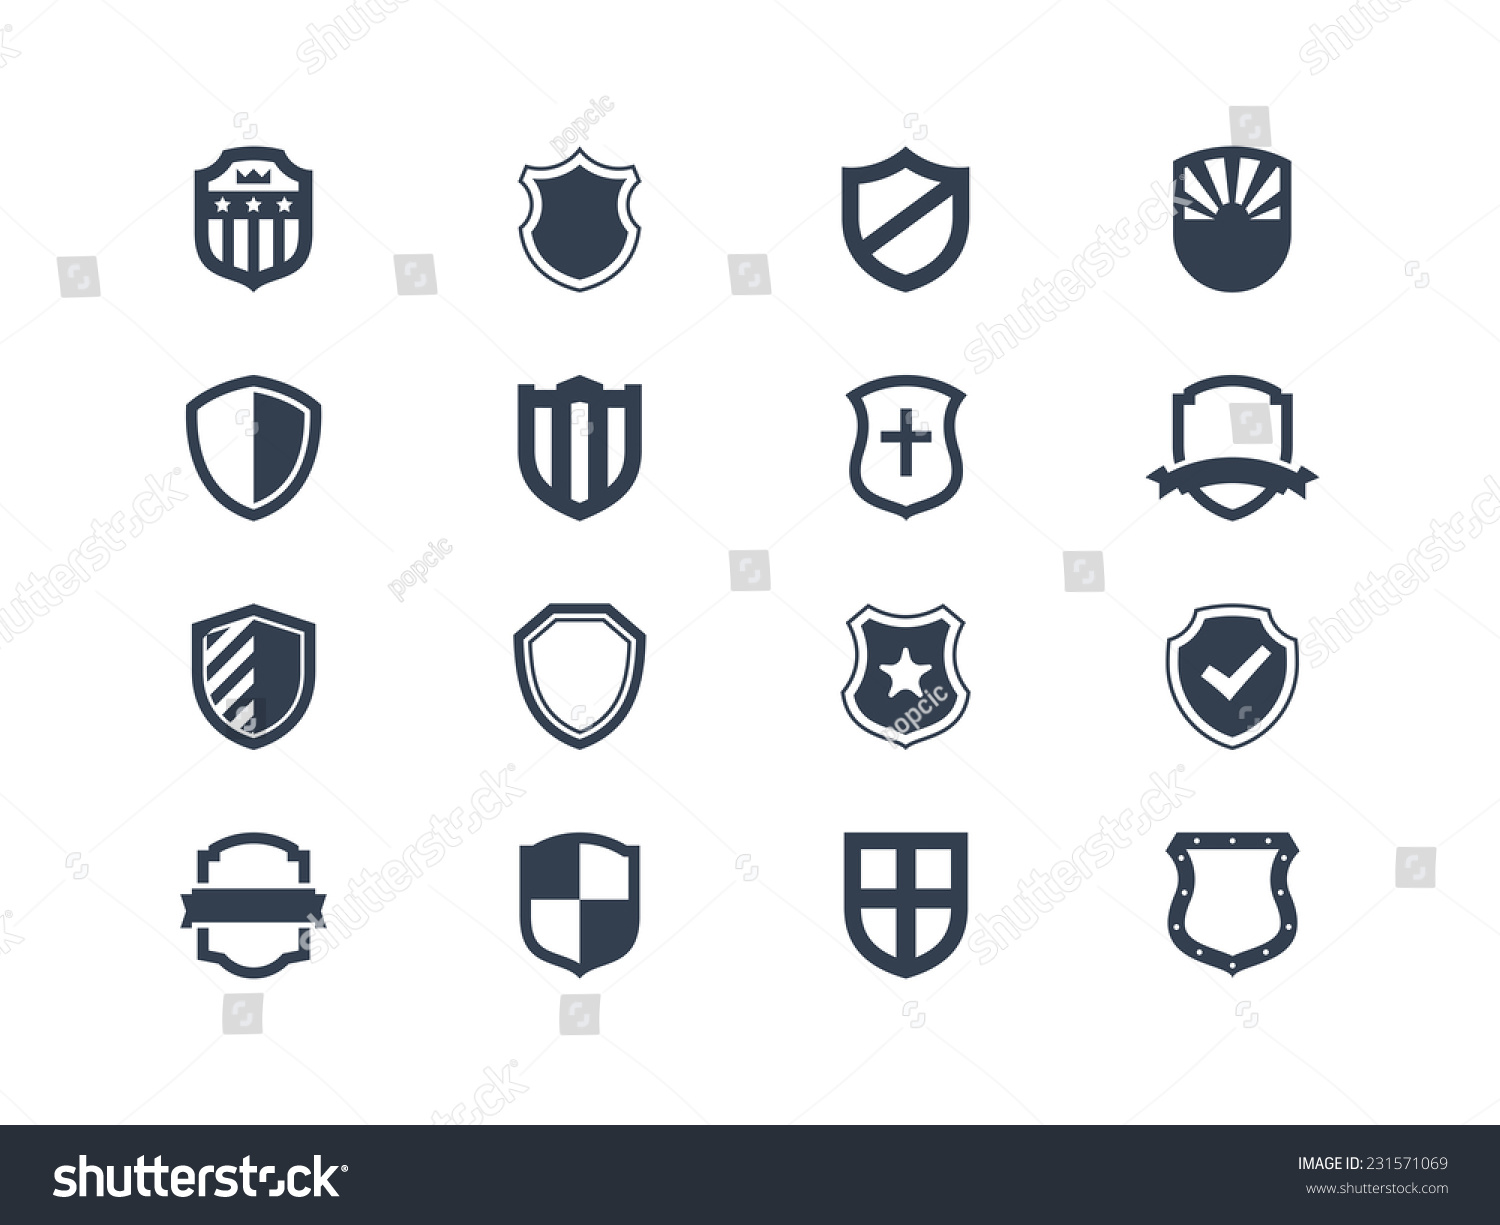 SVG of Shield icons svg